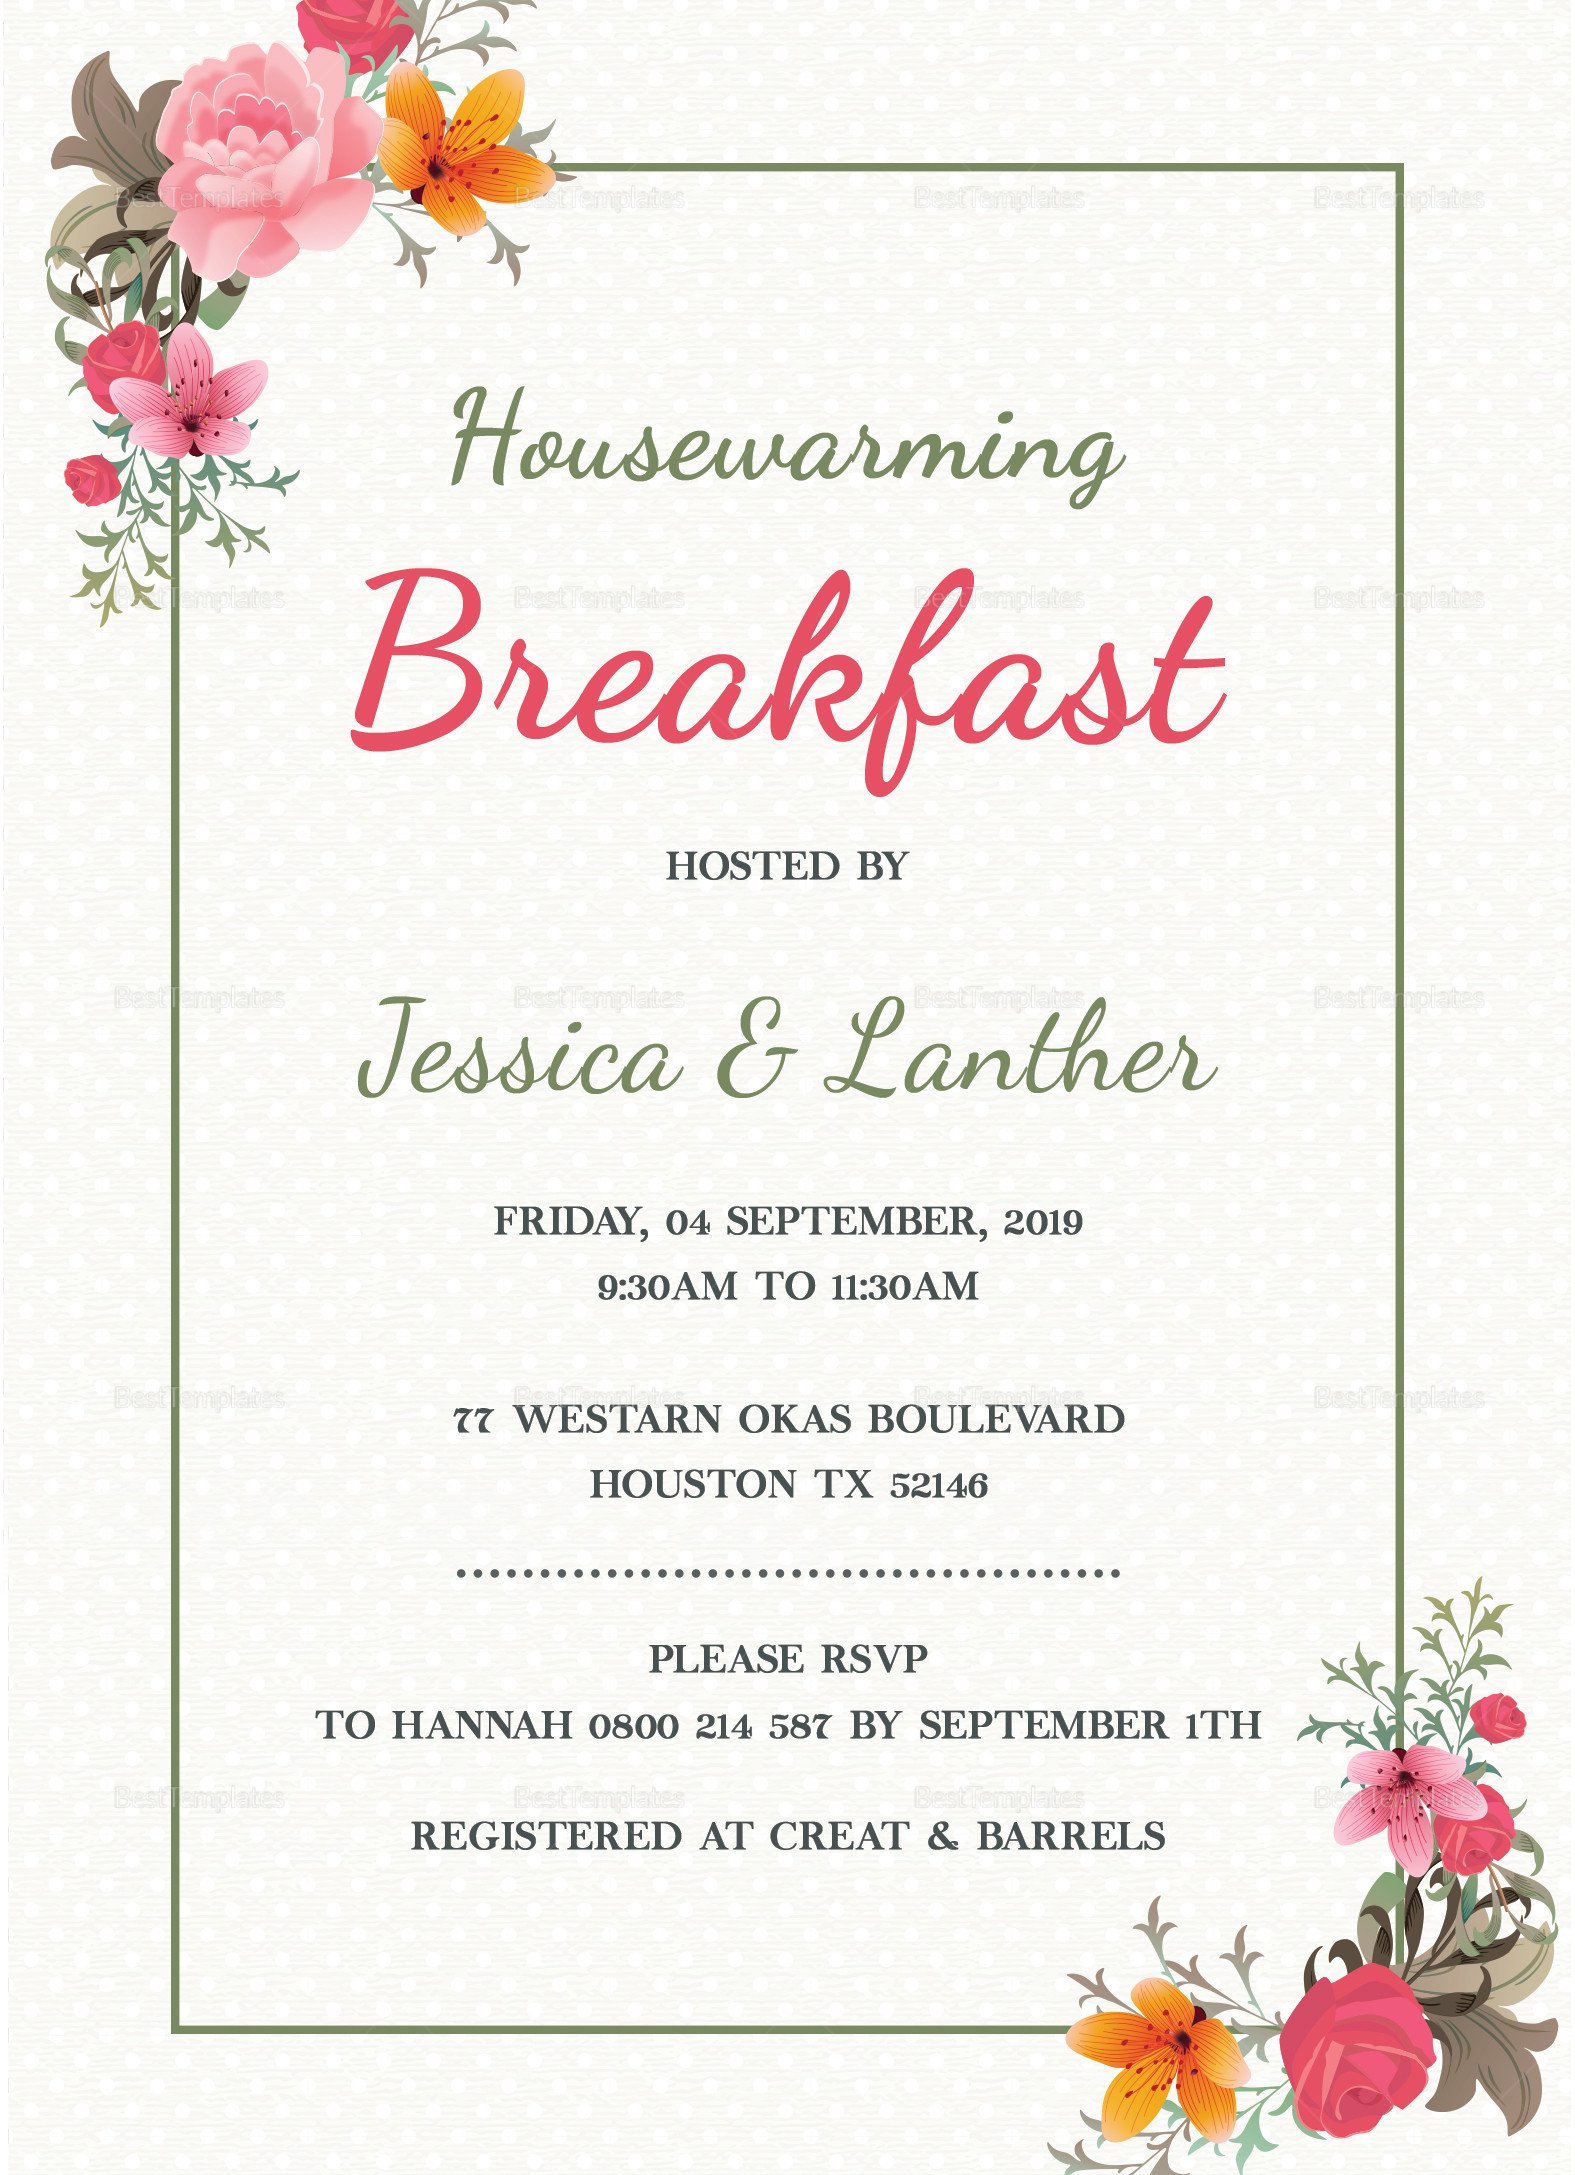 Housewarming Invitation Template Microsoft Word Housewarming Breakfast Party Invitation Design Template In